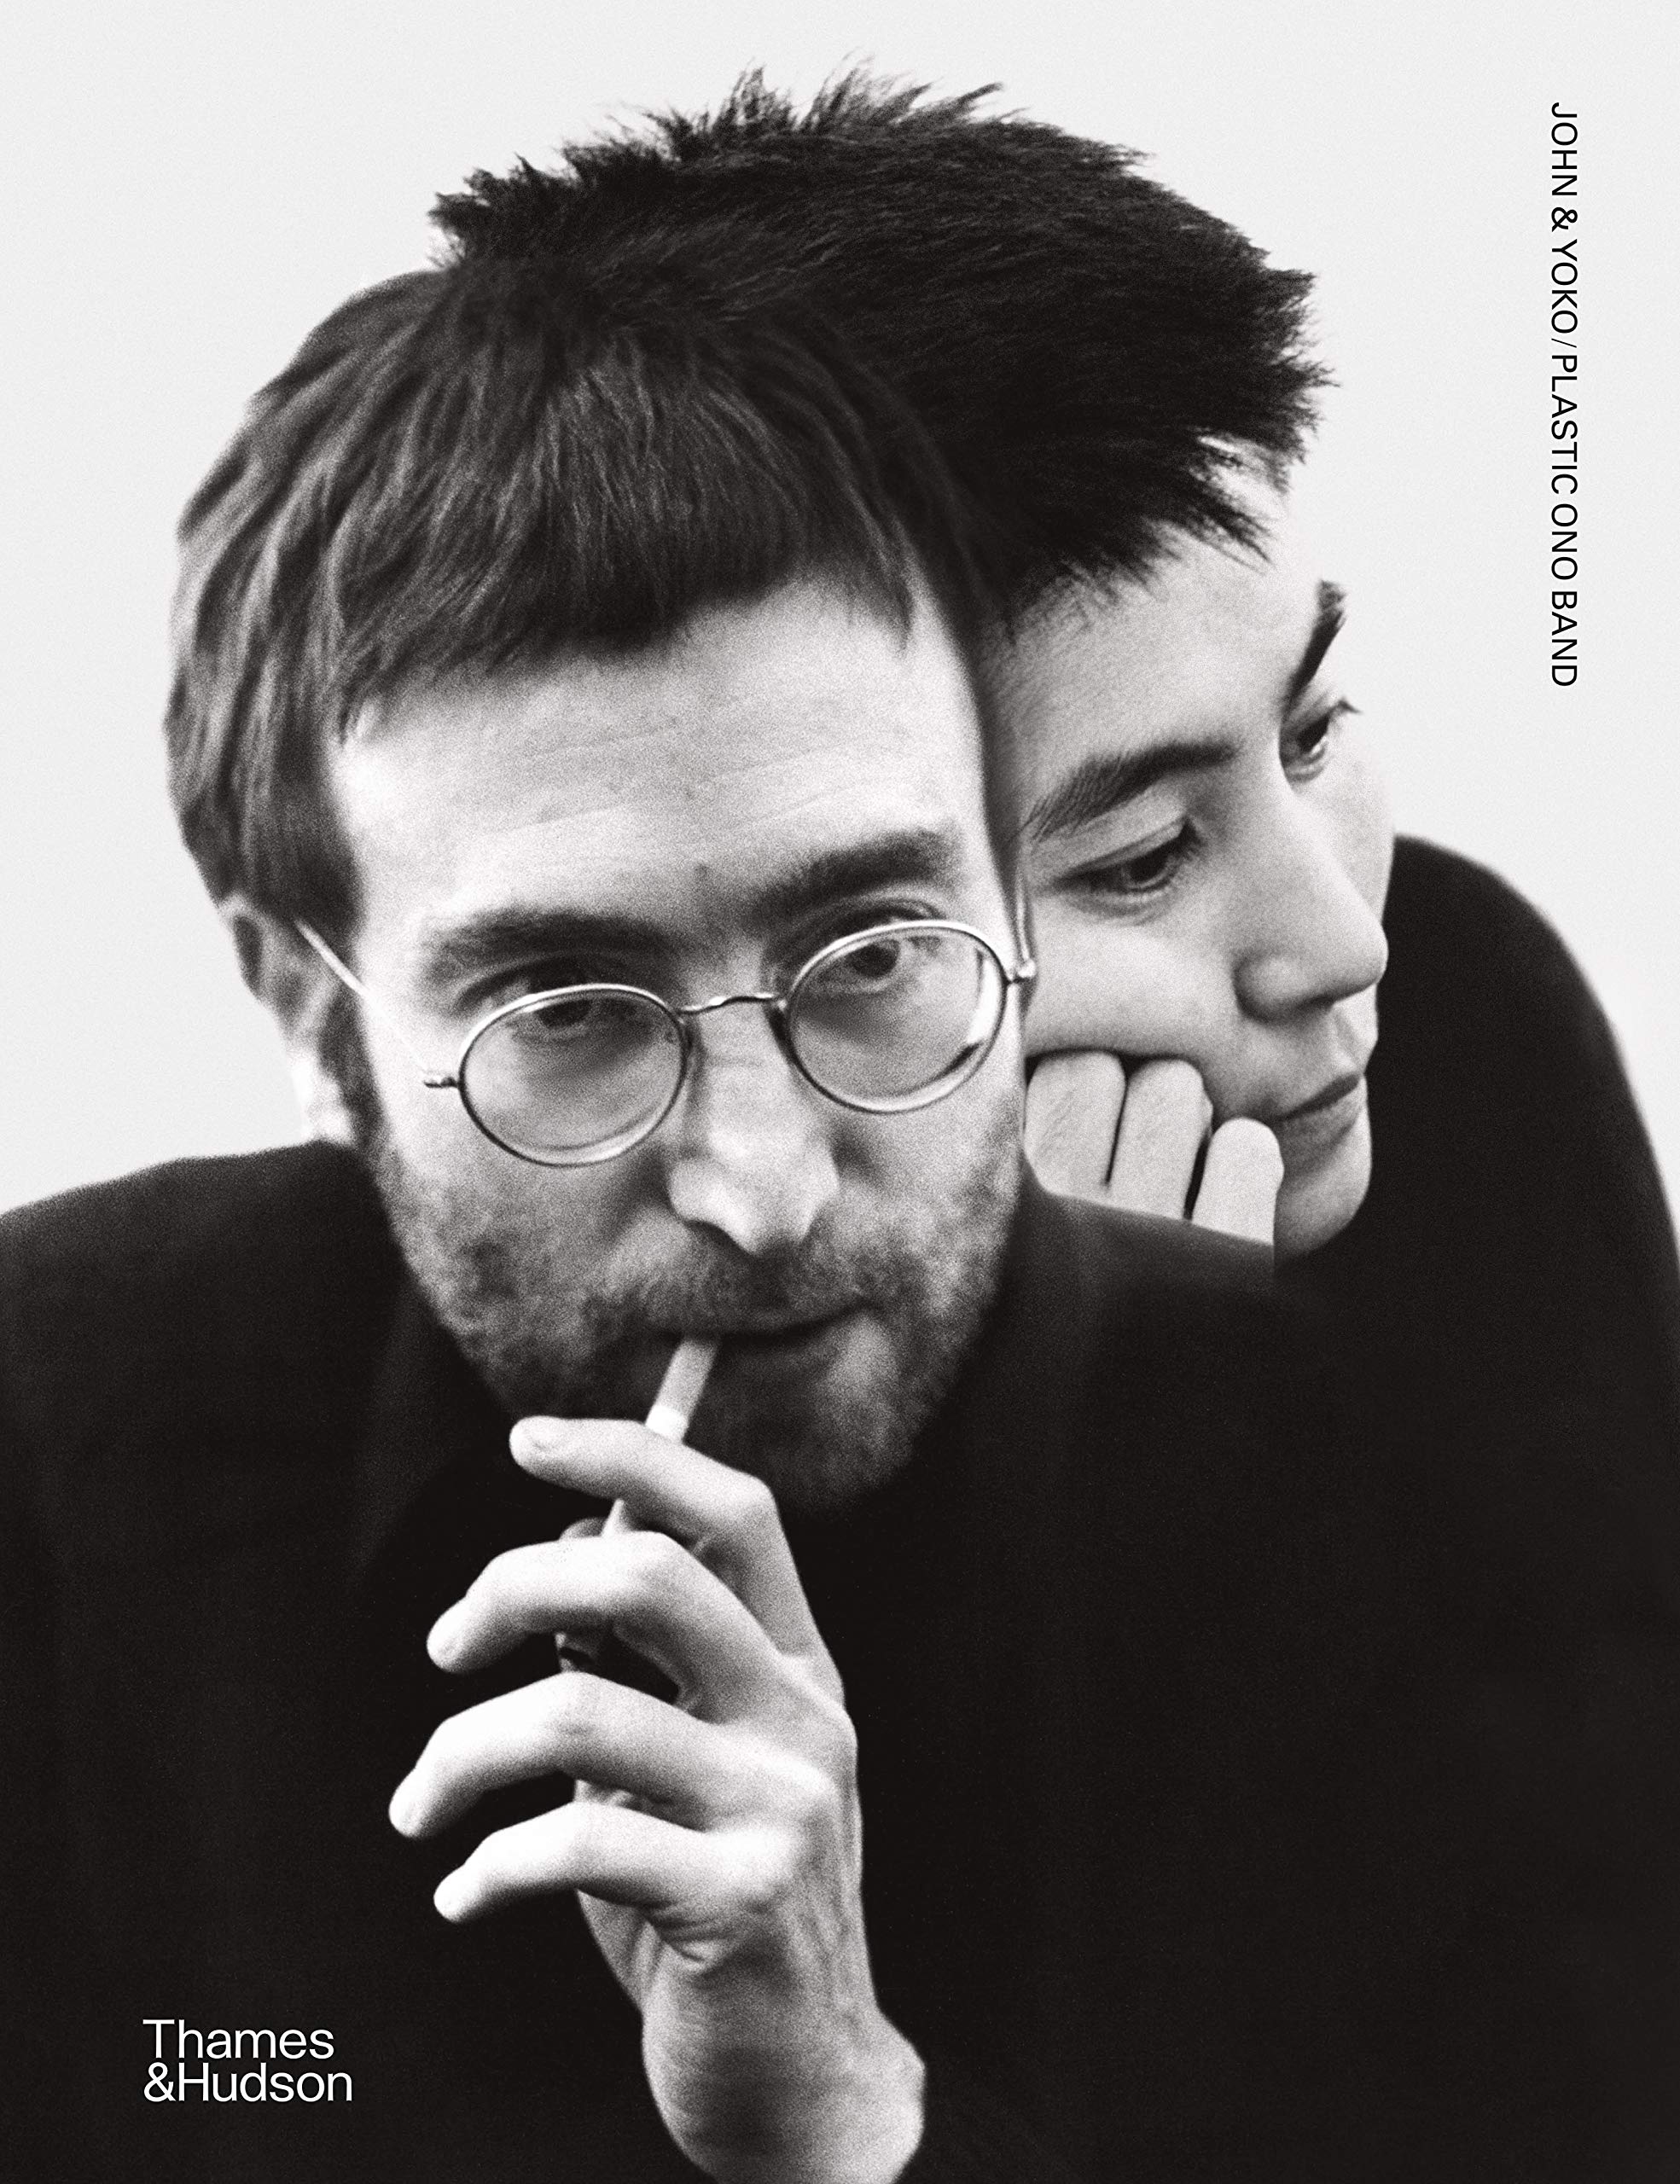 John and Yoko - Plastic Ono Band | John Lennon, Yoko Ono